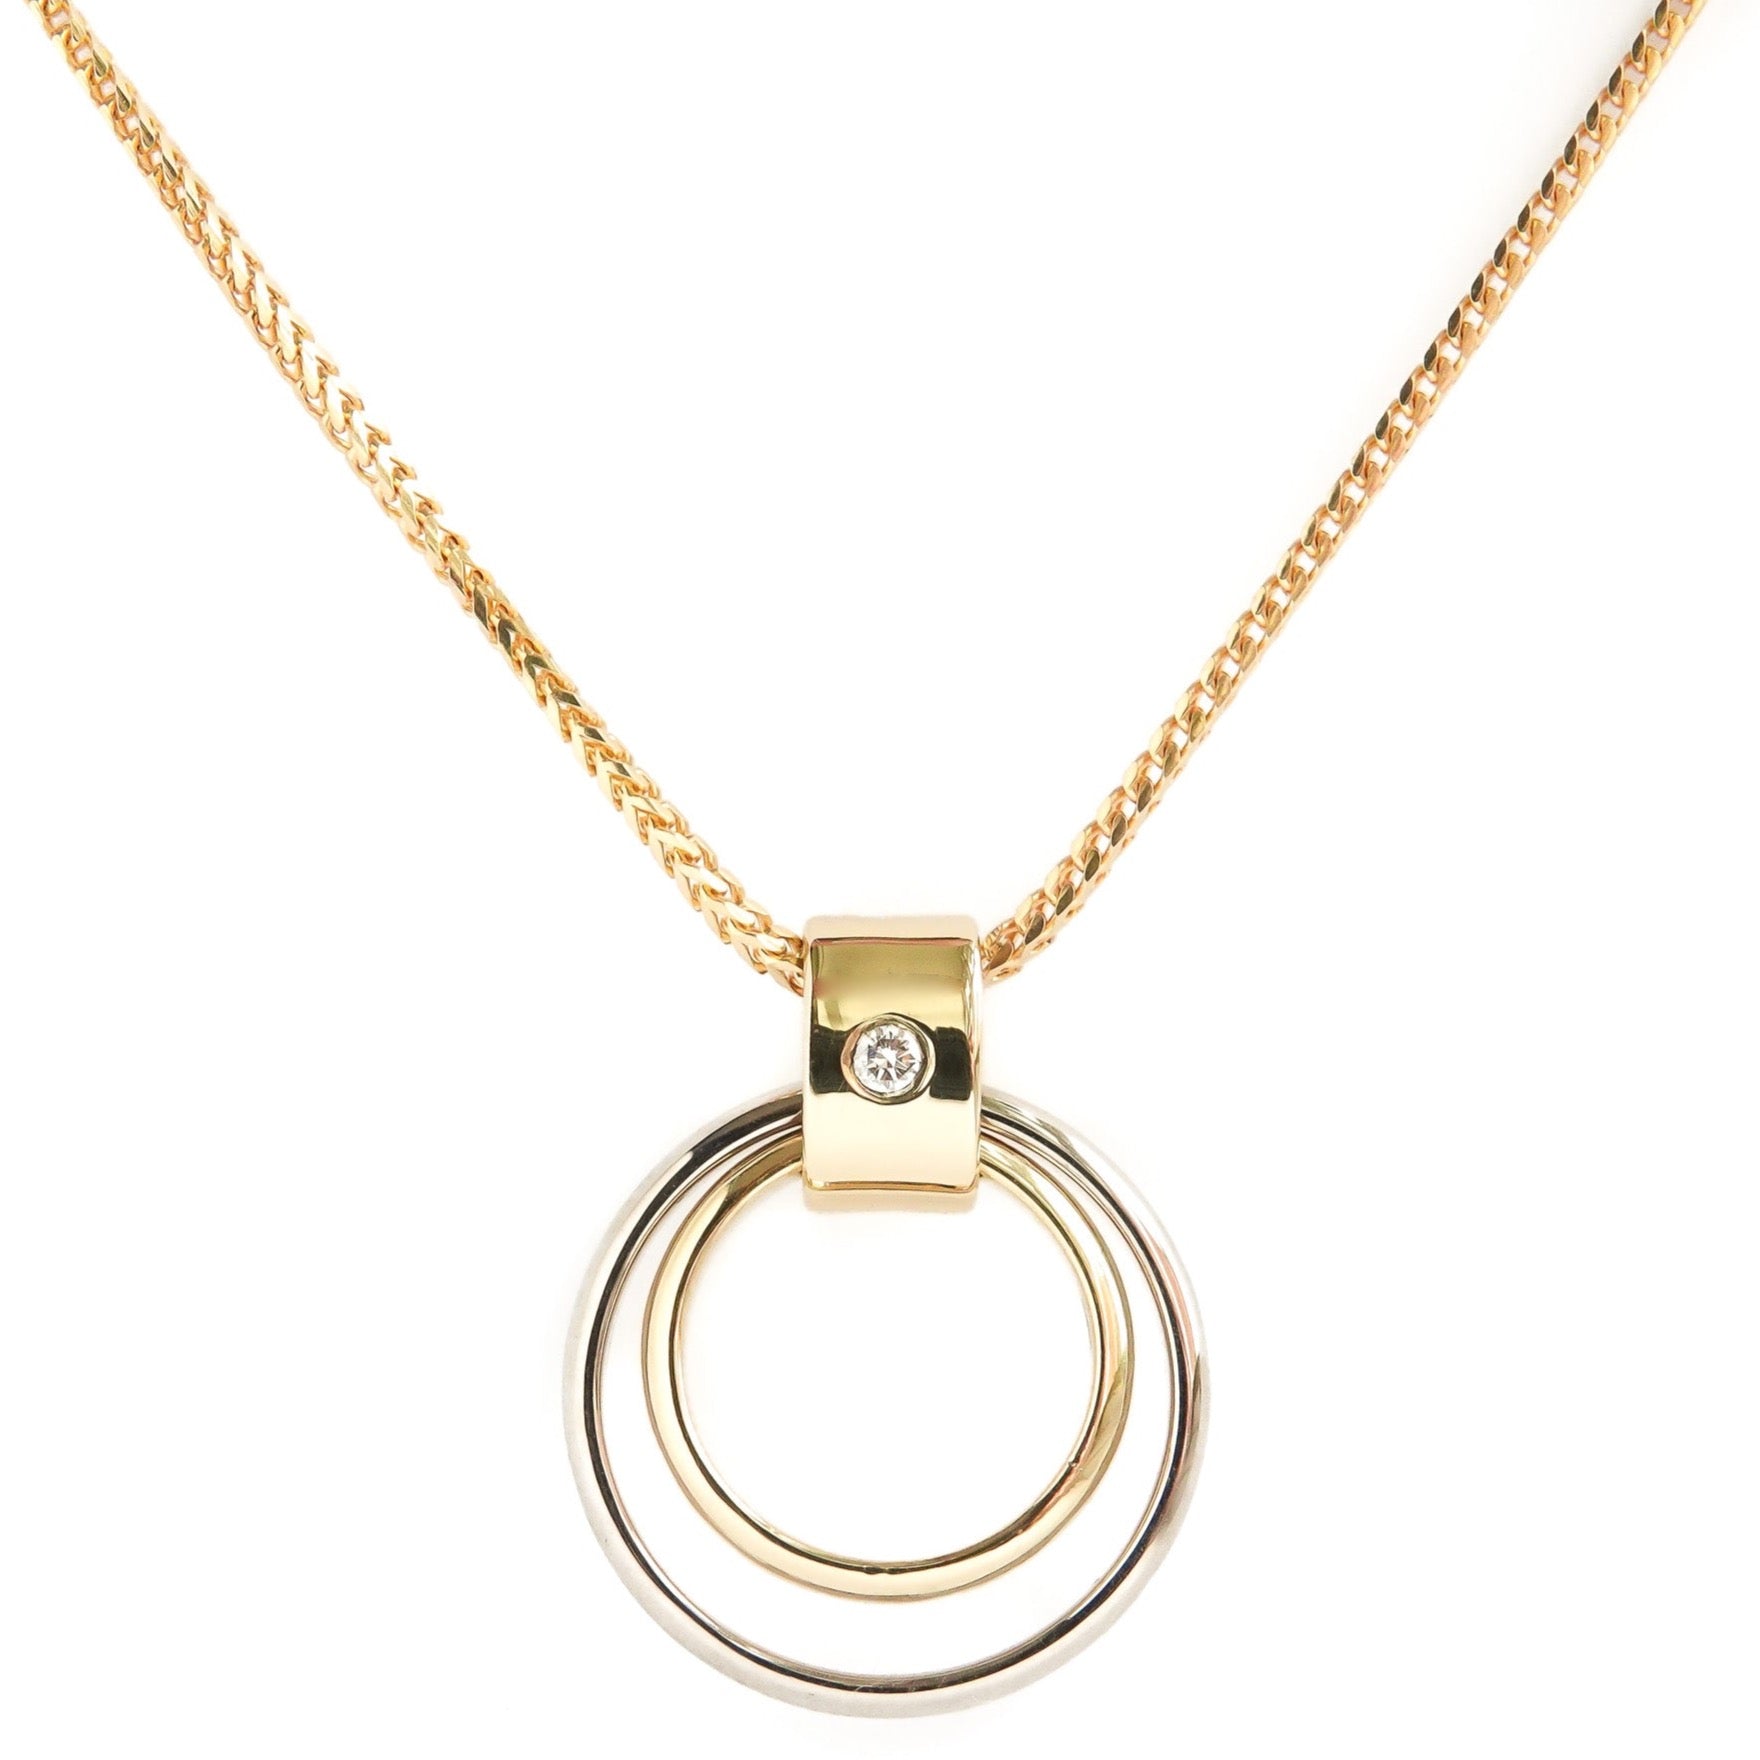 Silver 18ct Gold Diamond Necklace pendant contemporary bespoke handmade Sue Lane